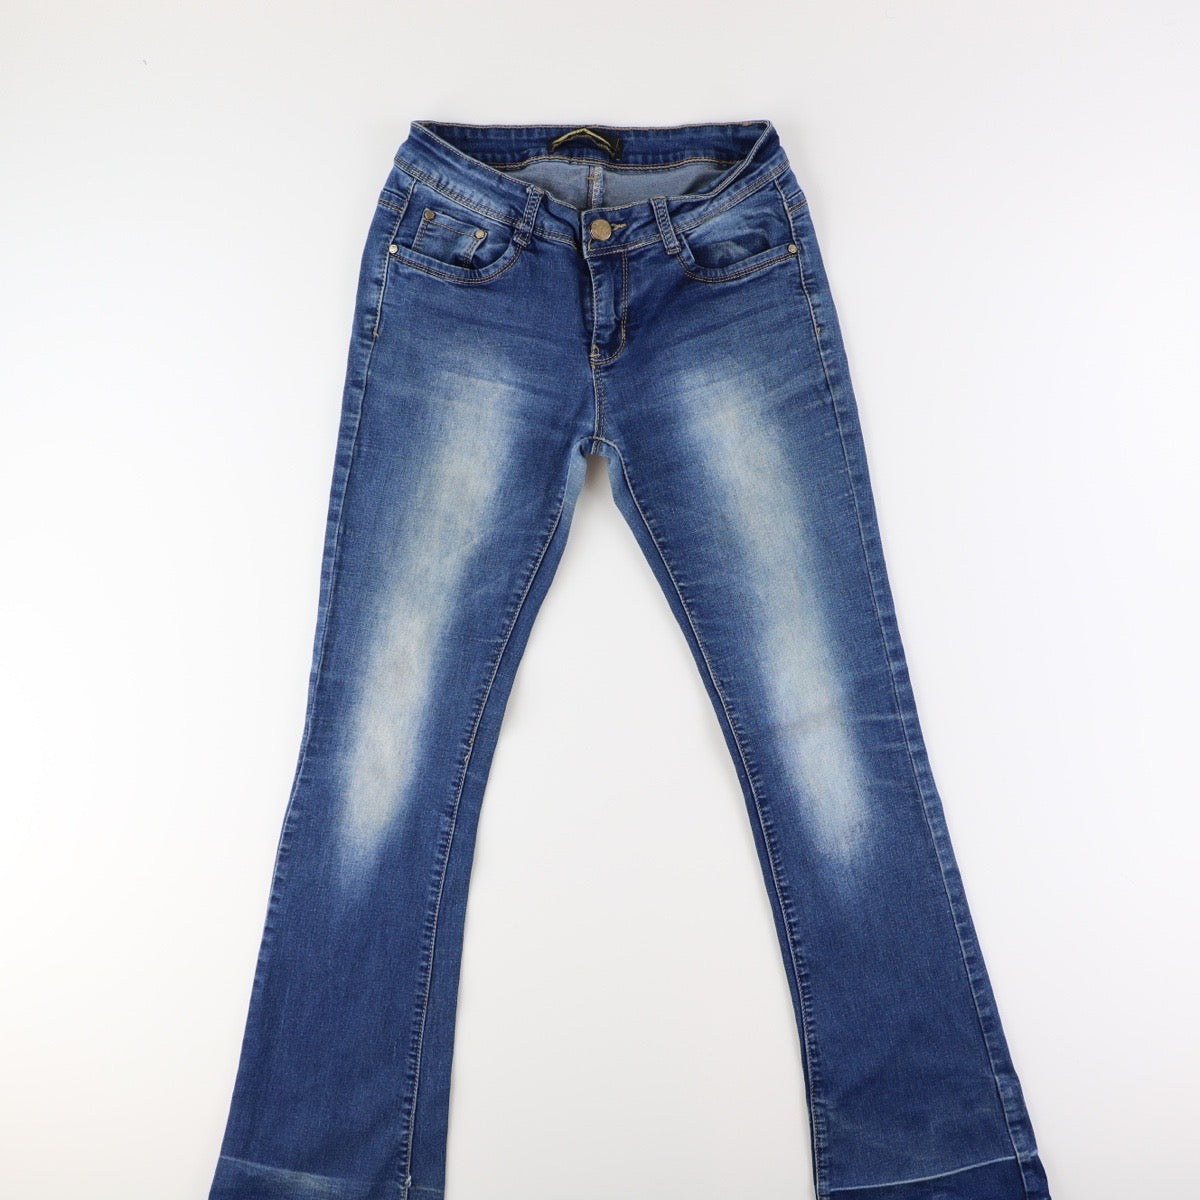 Vintage Jeans (27)